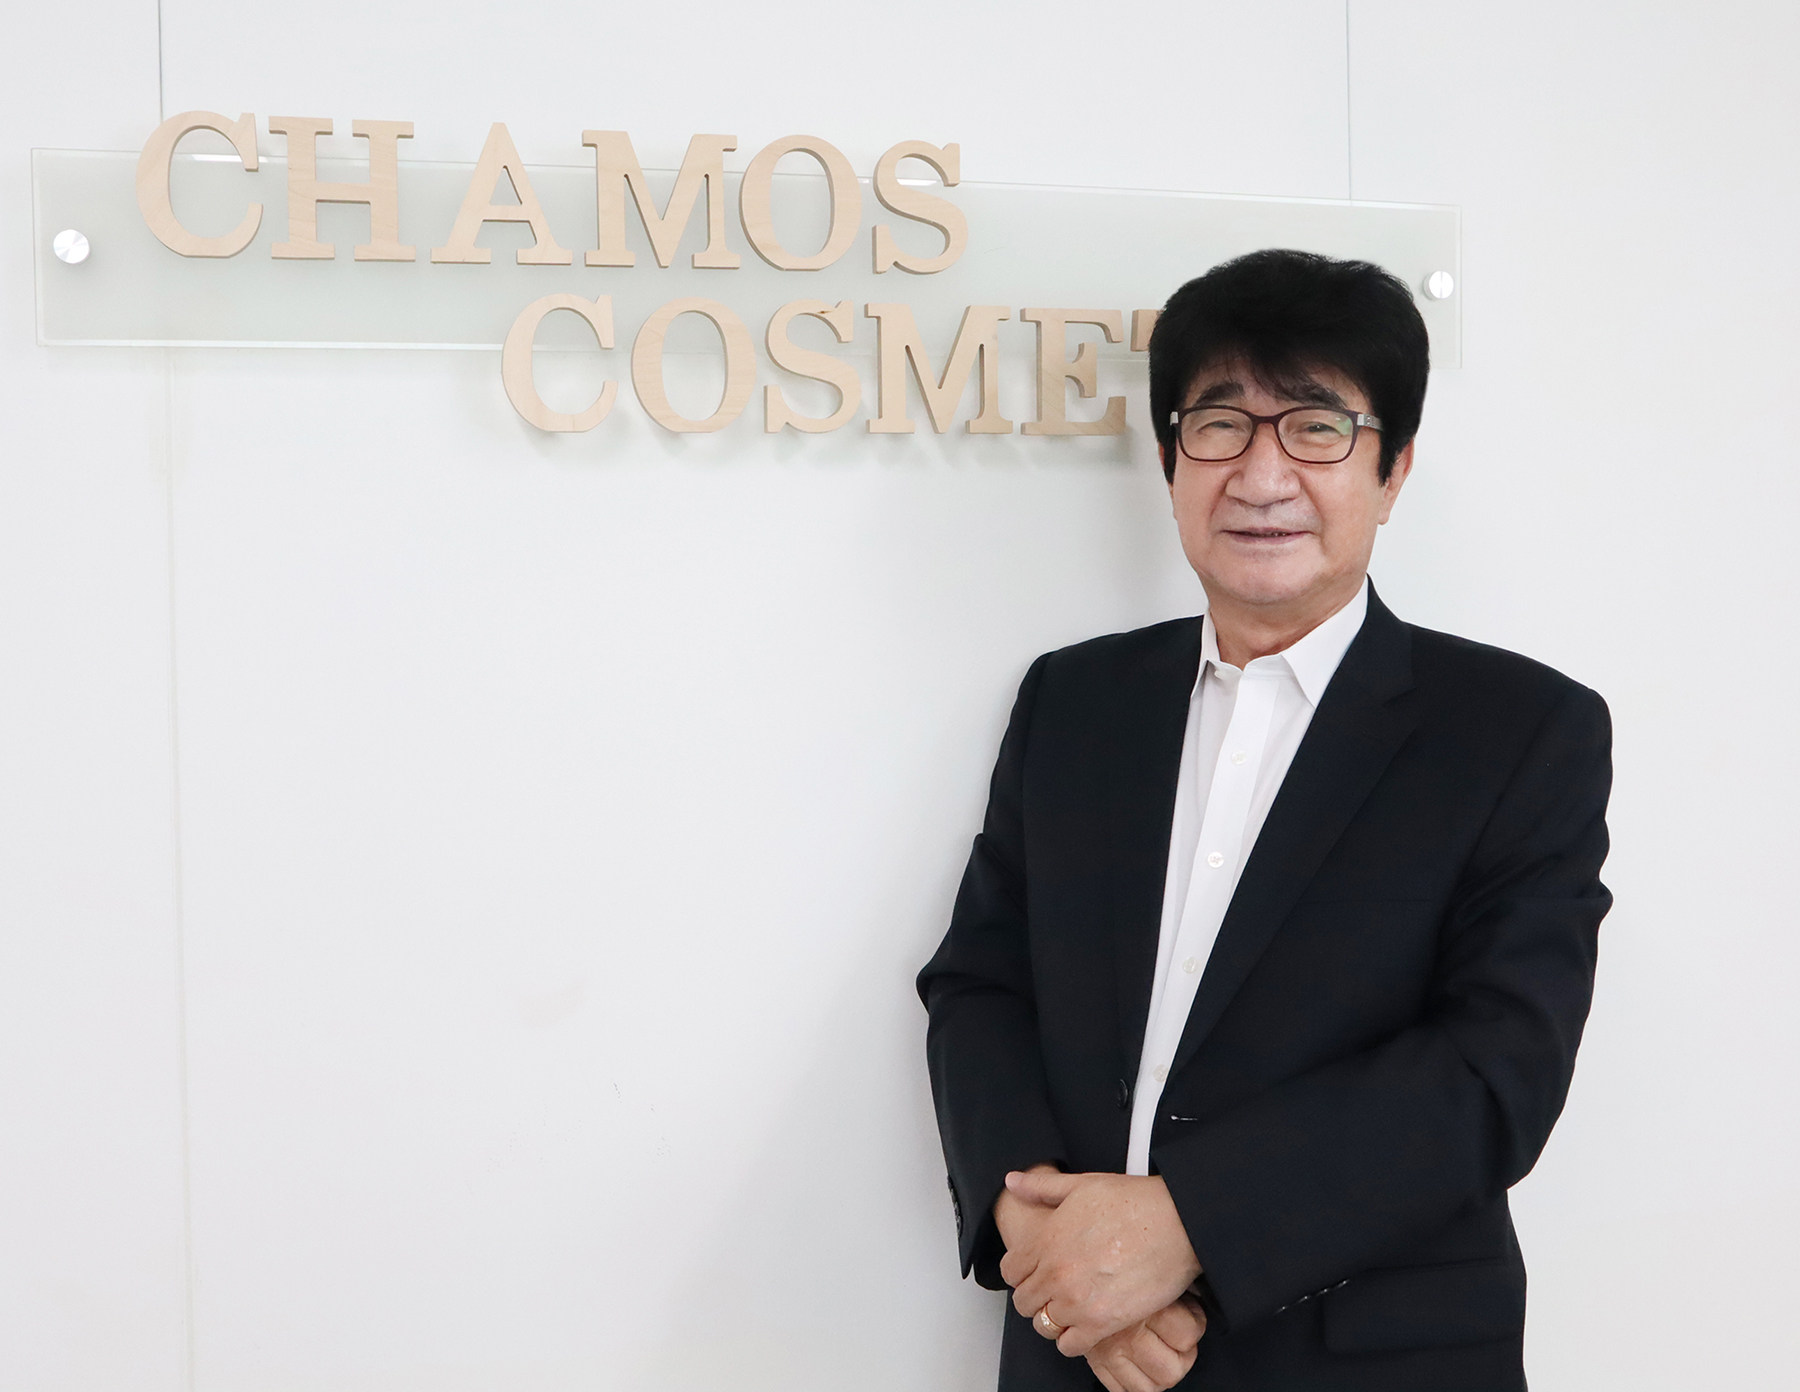 Yoon Chan-mo, CEO of Chamos Cosmetic